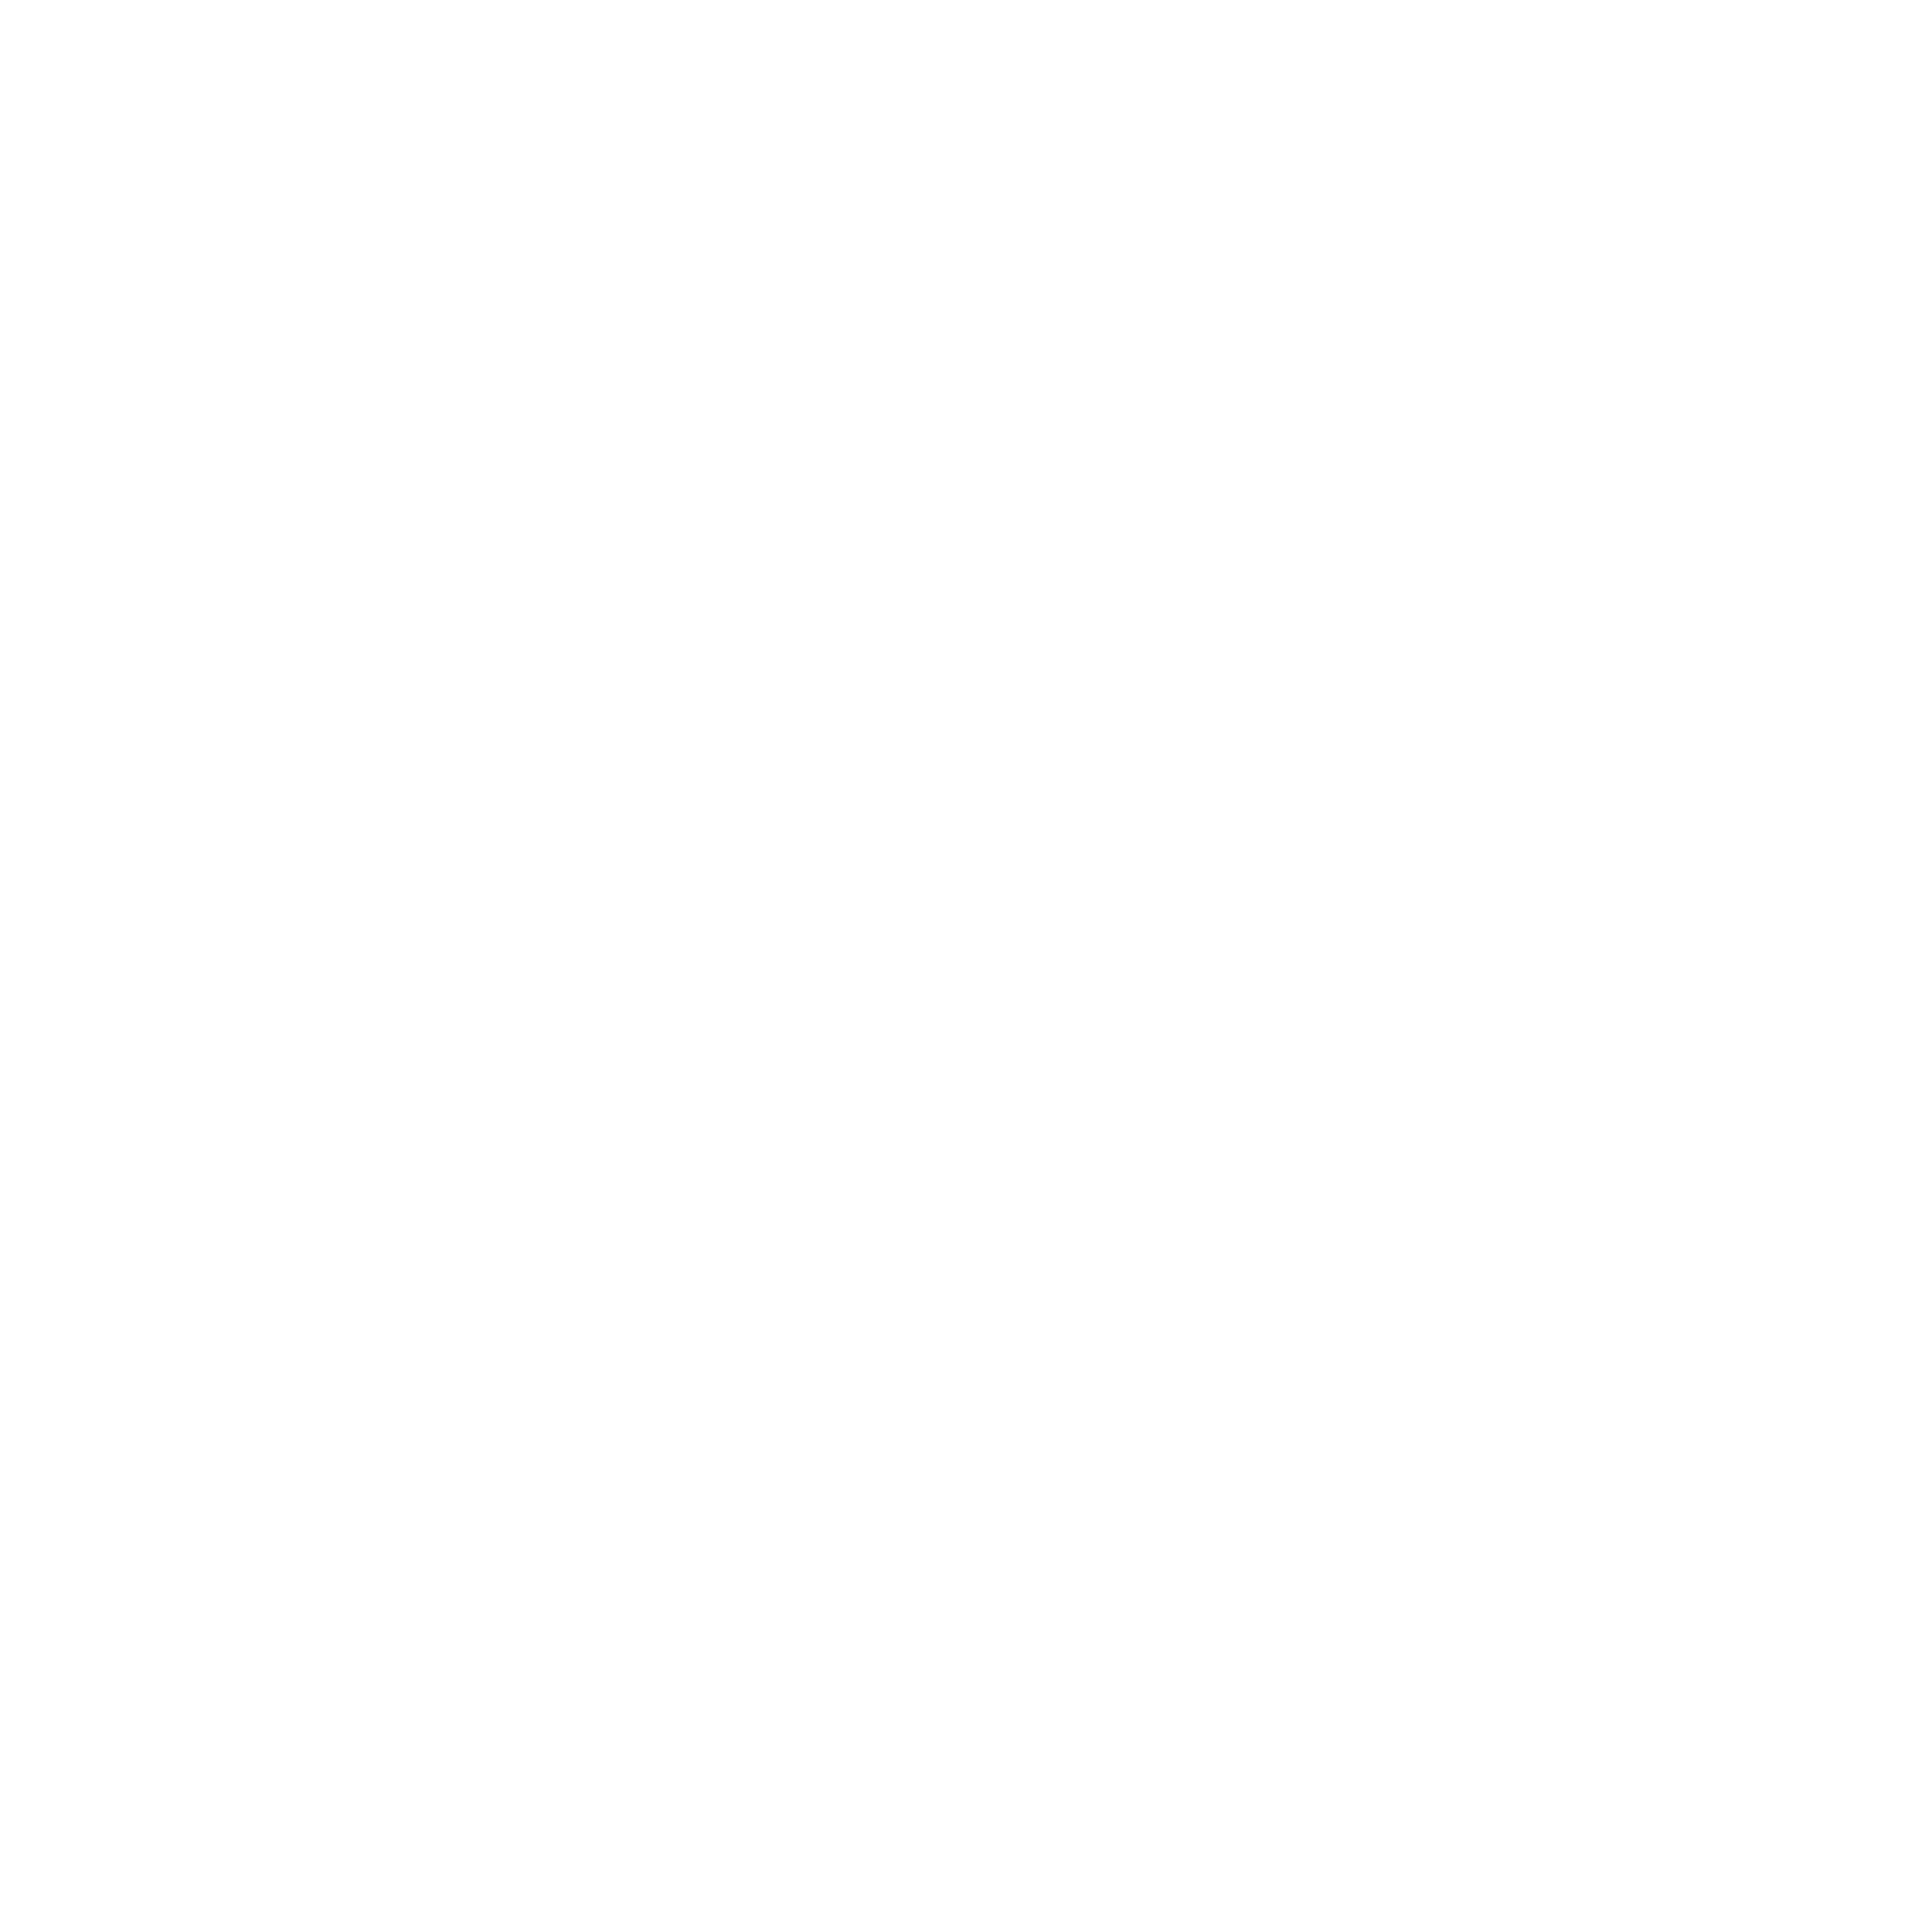 Motherly logo